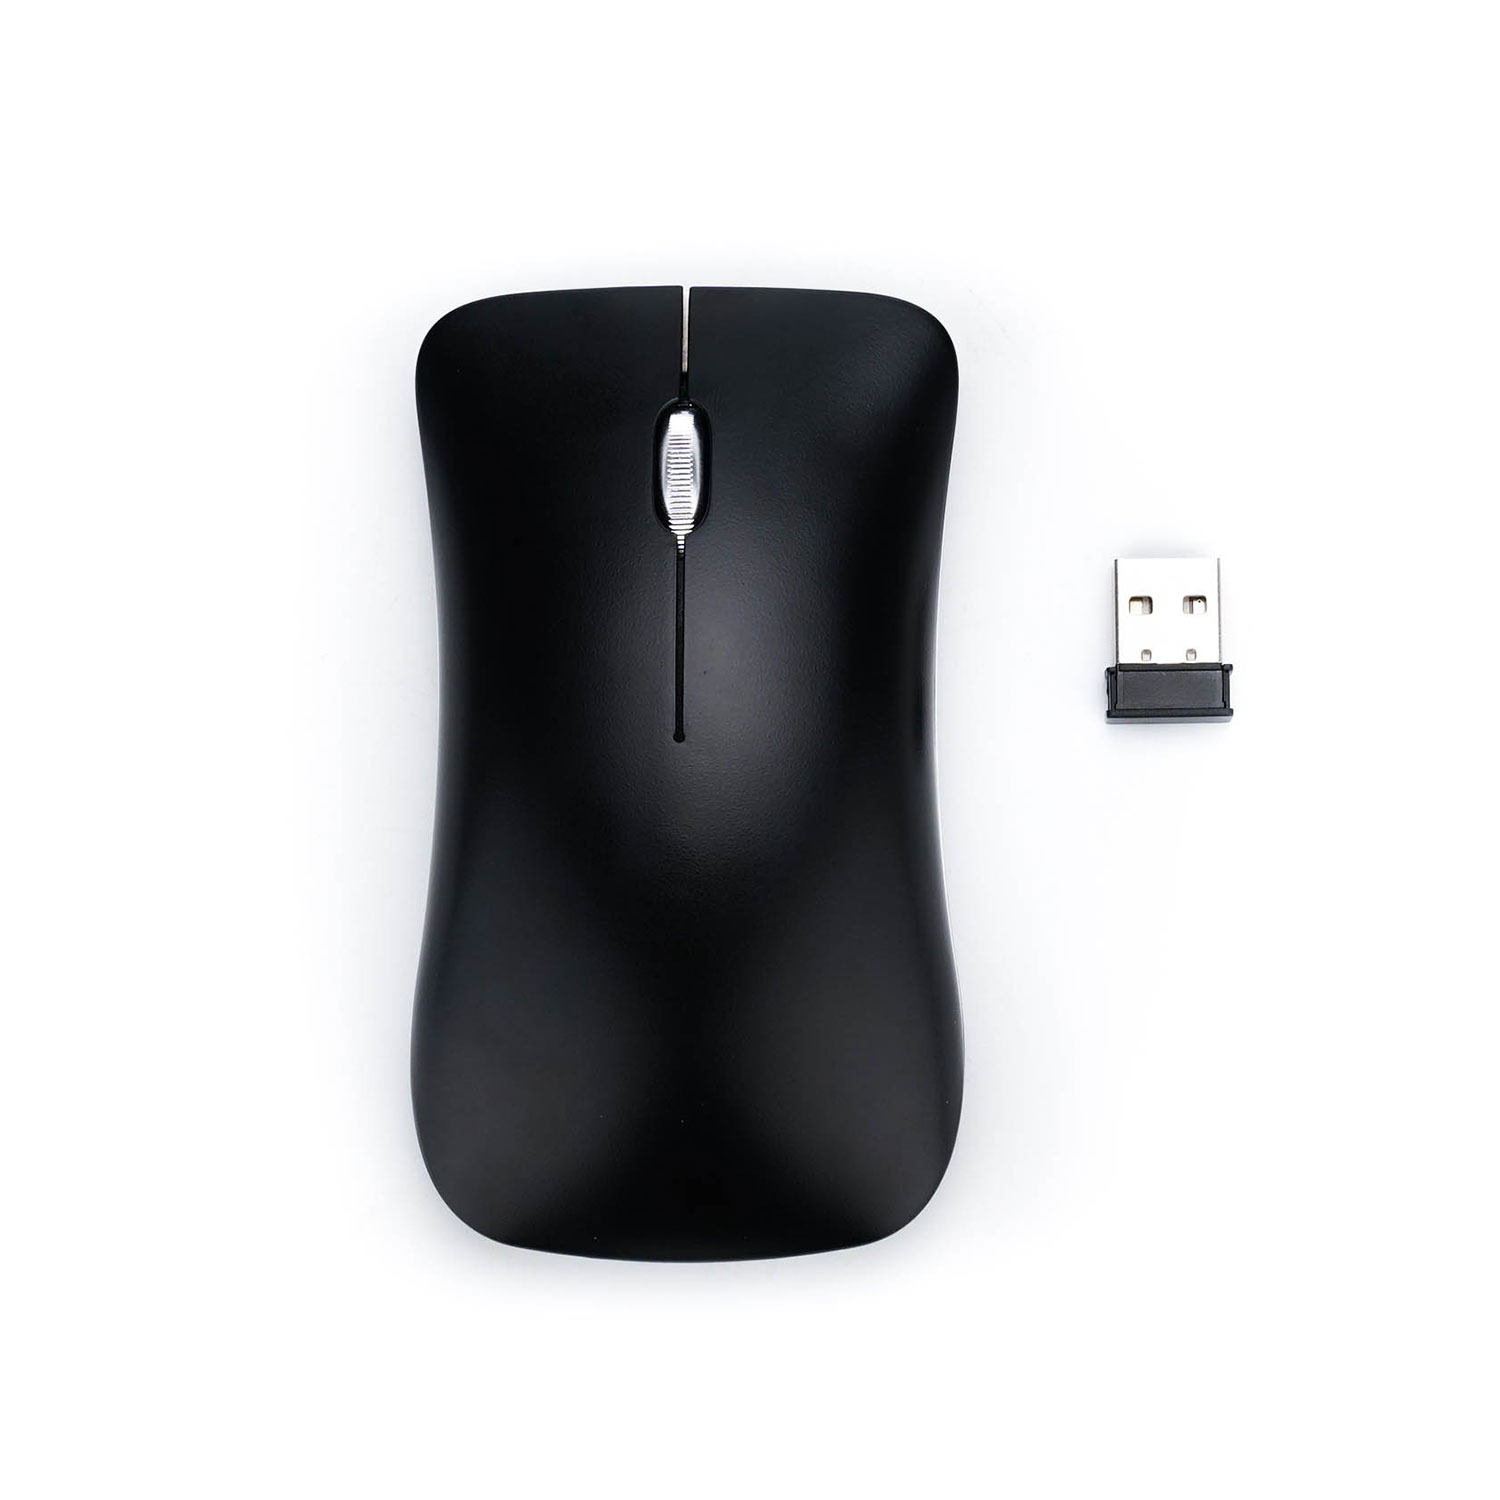 WM-11 Wireless Mouse